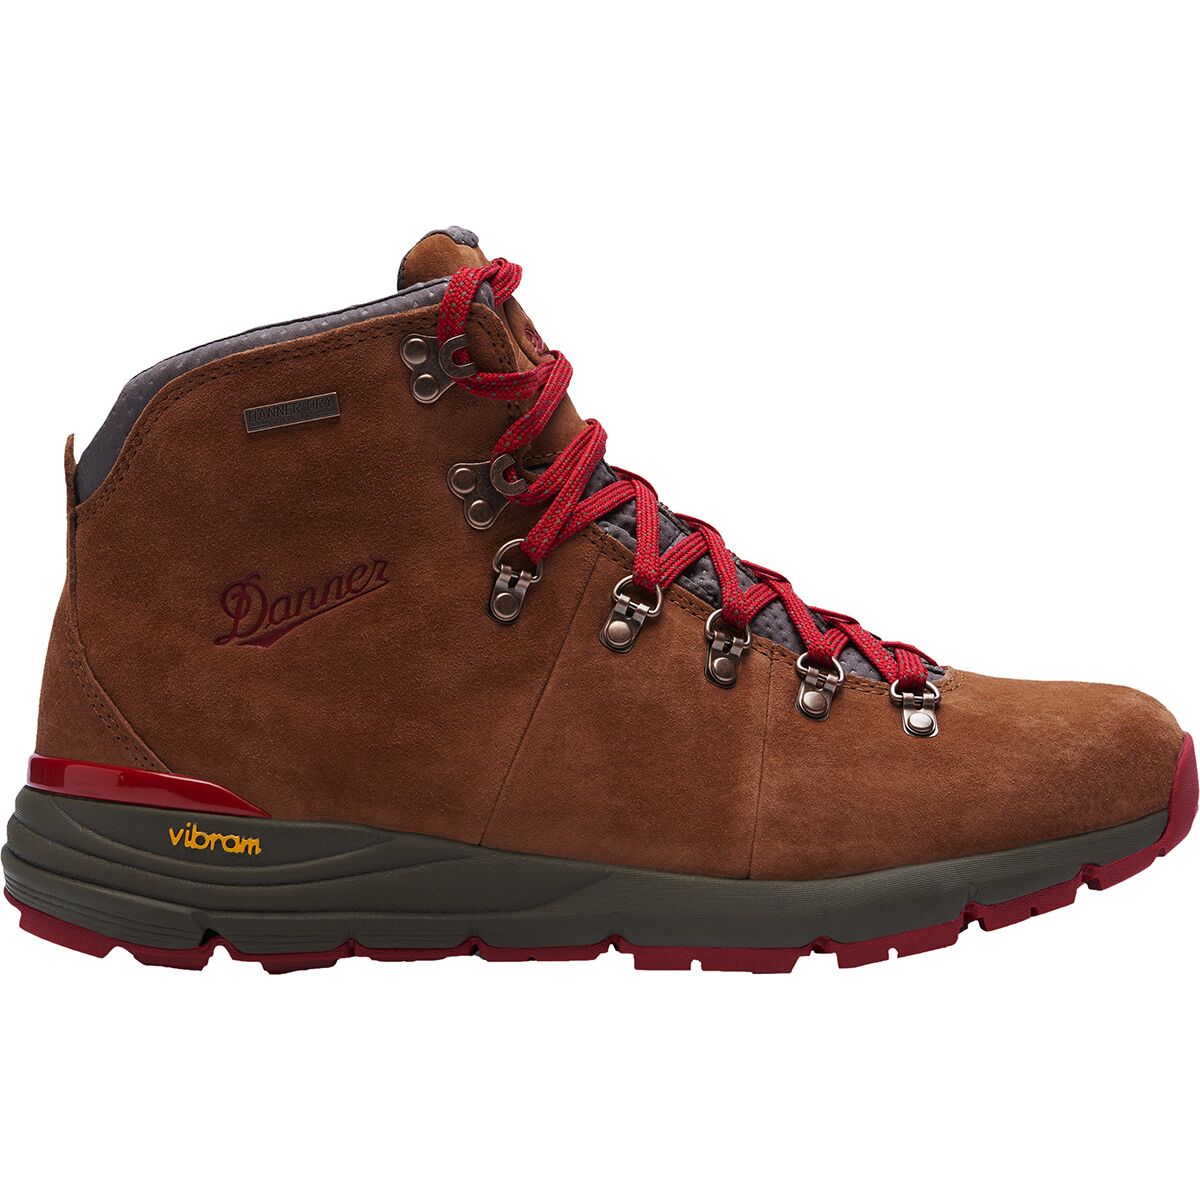 Danner Mountain 600 Wide Hiking Boot - Men's